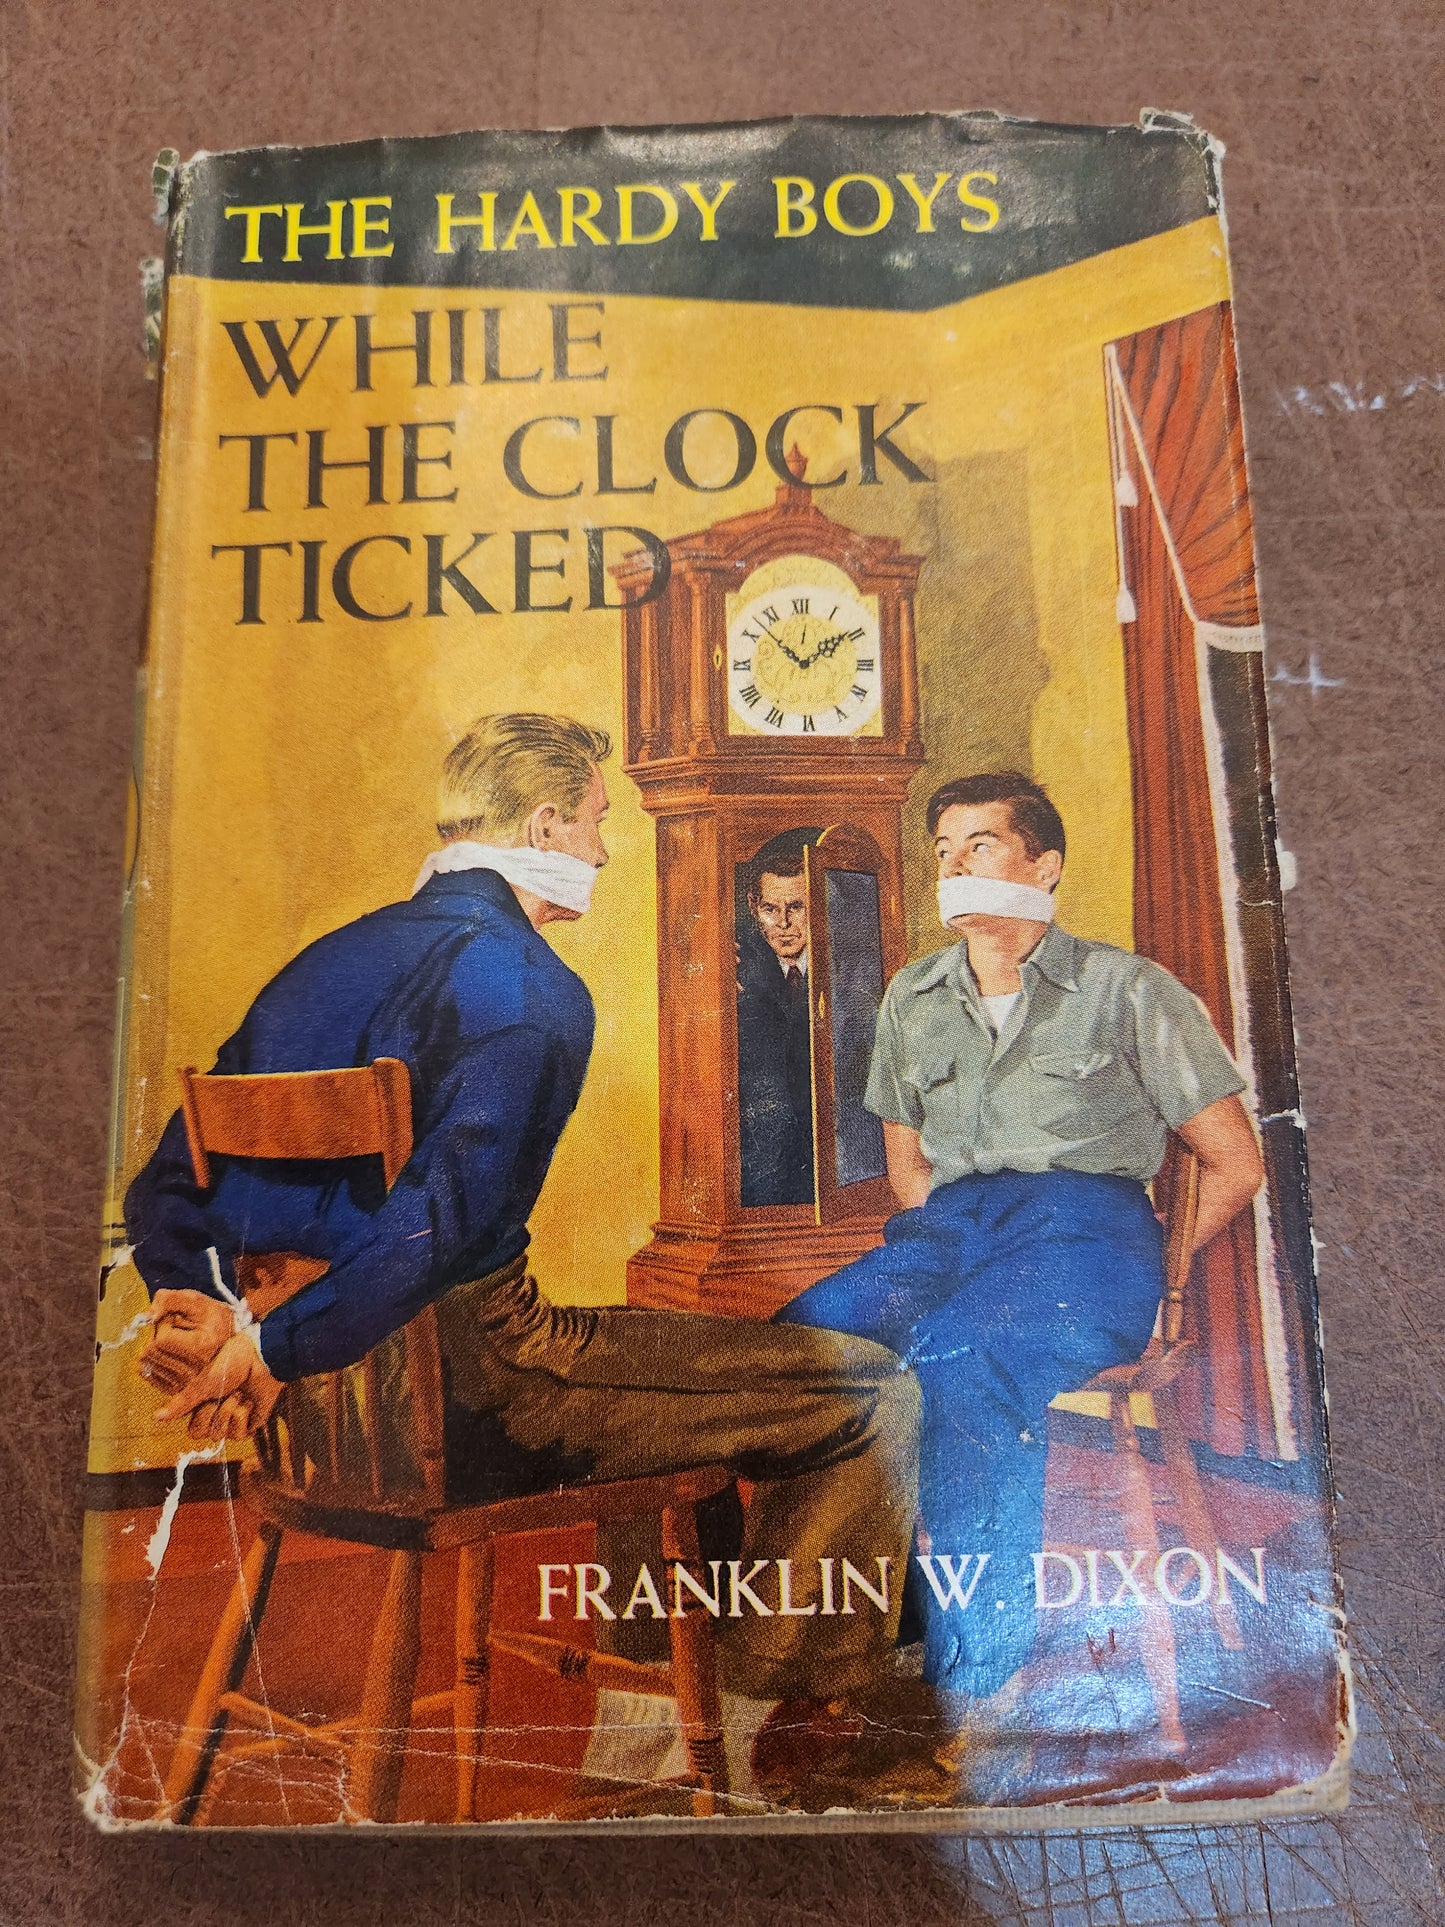 HARDY BOYS, WHILE THE CLOCK TICKED, Franklin W. Dixon, Pub 1932, 1955 A-36